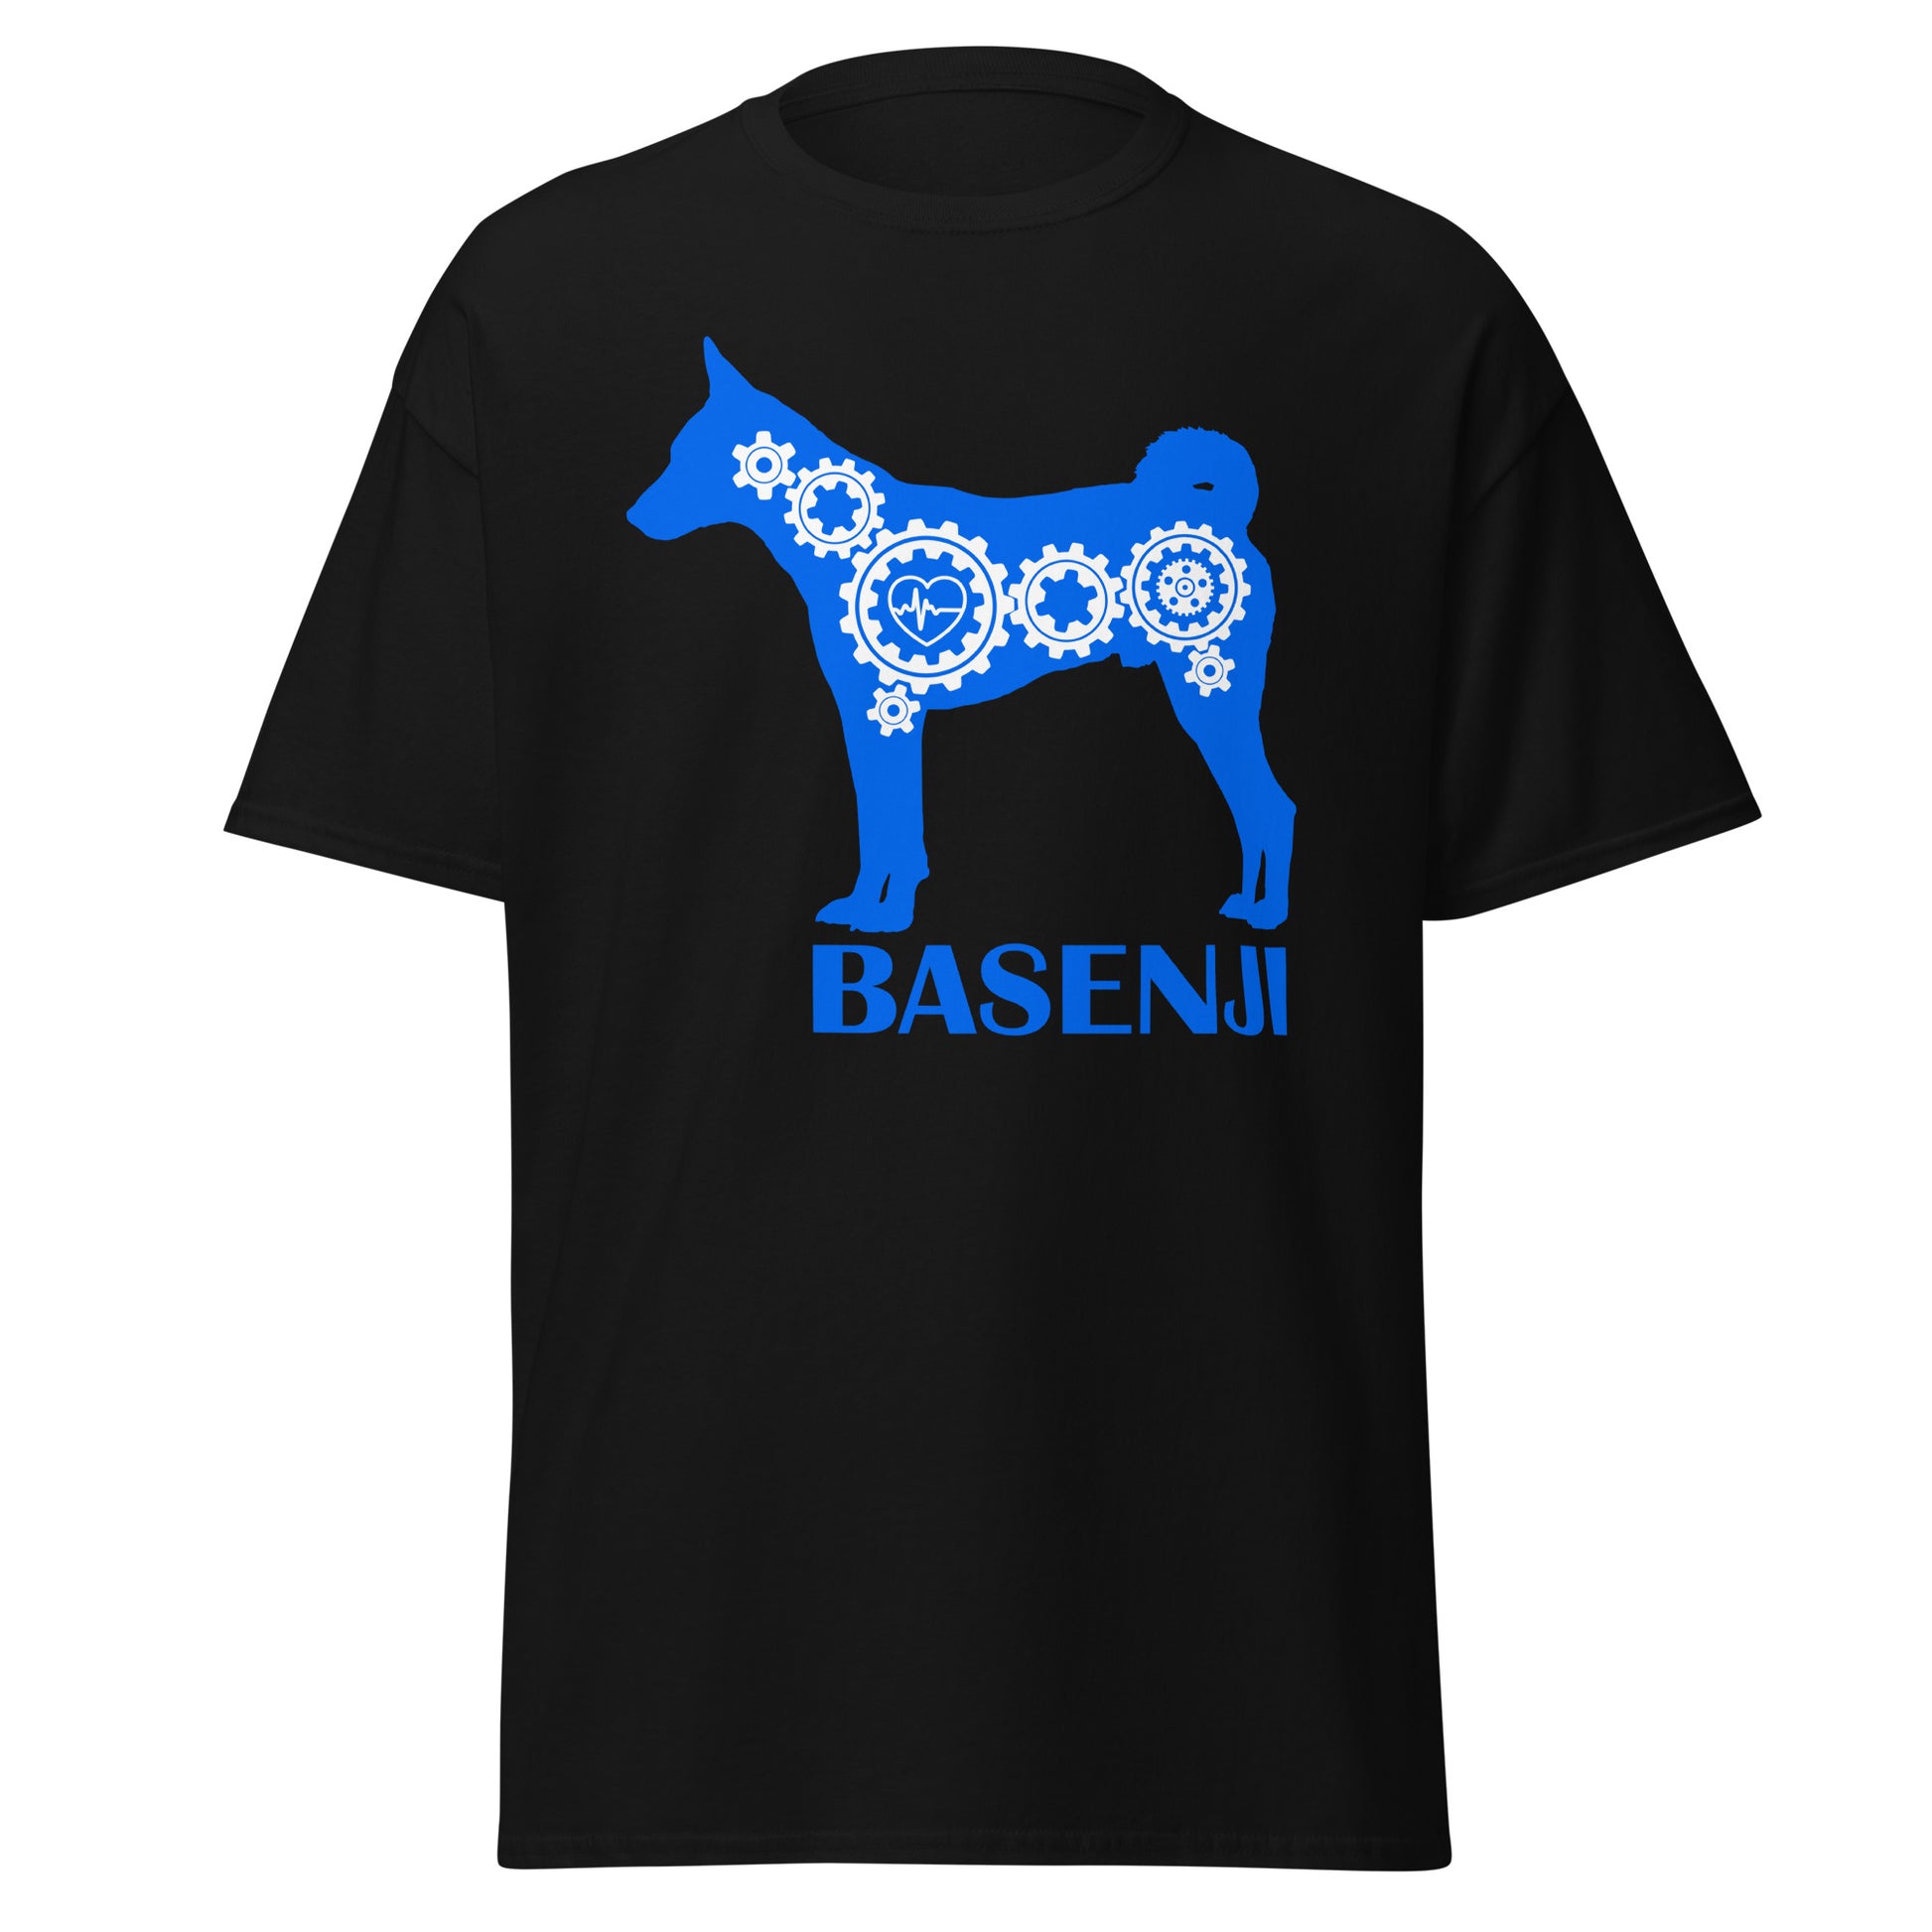 Basenji Bionic men’s black t-shirt by Dog Artistry.